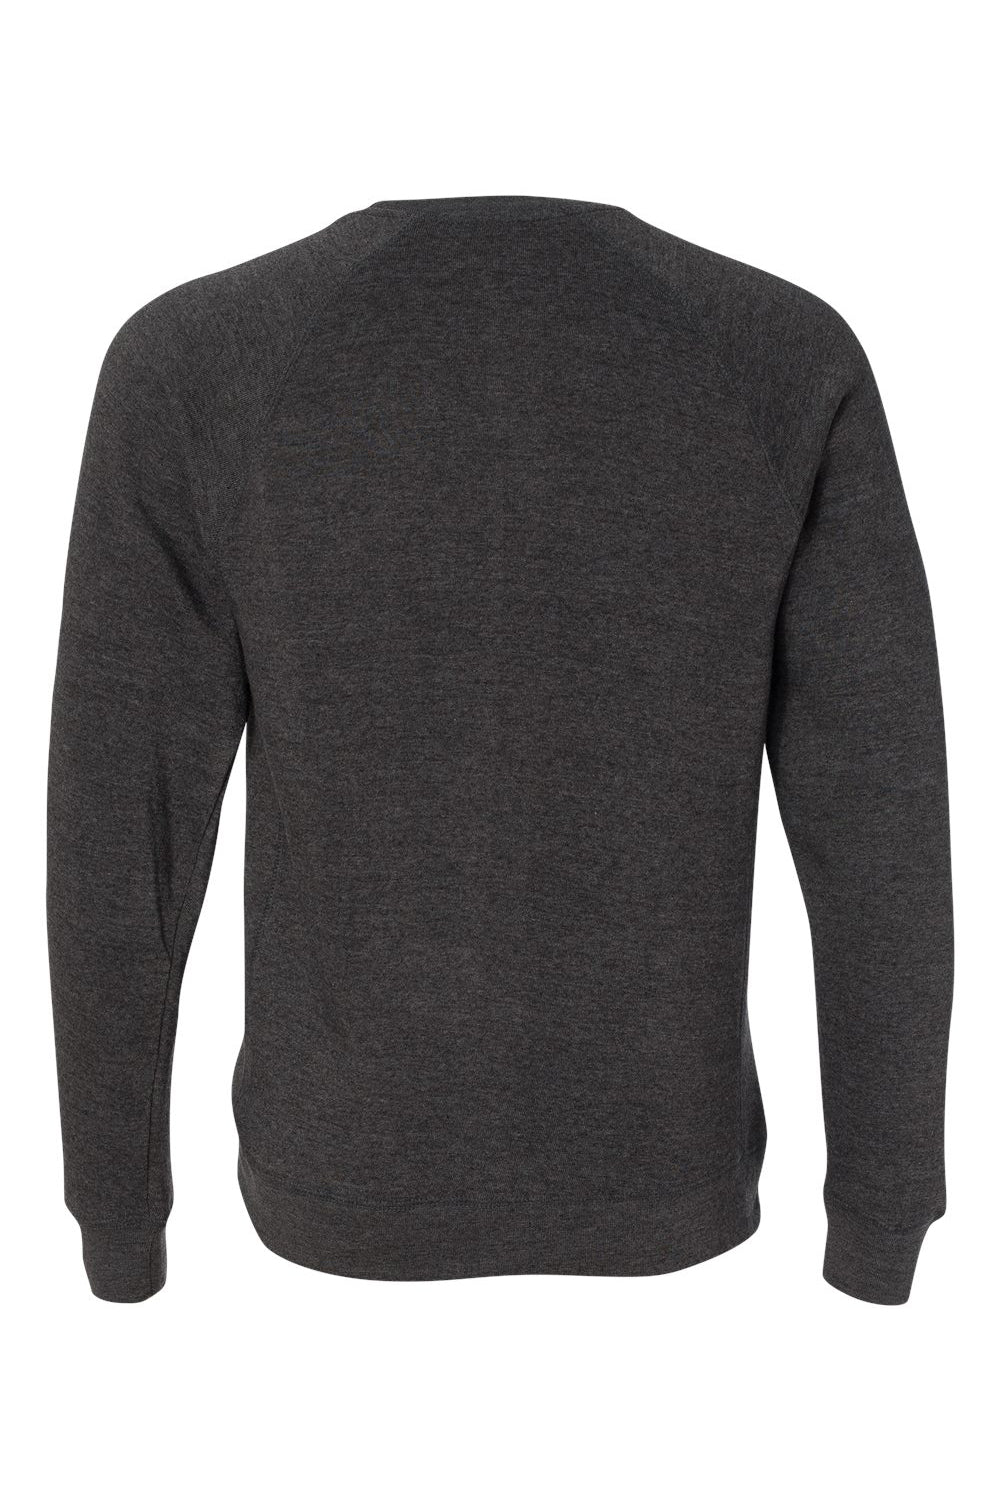 Independent Trading Co. PRM30SBC Mens Special Blend Crewneck Raglan Sweatshirt Carbon Grey Flat Back